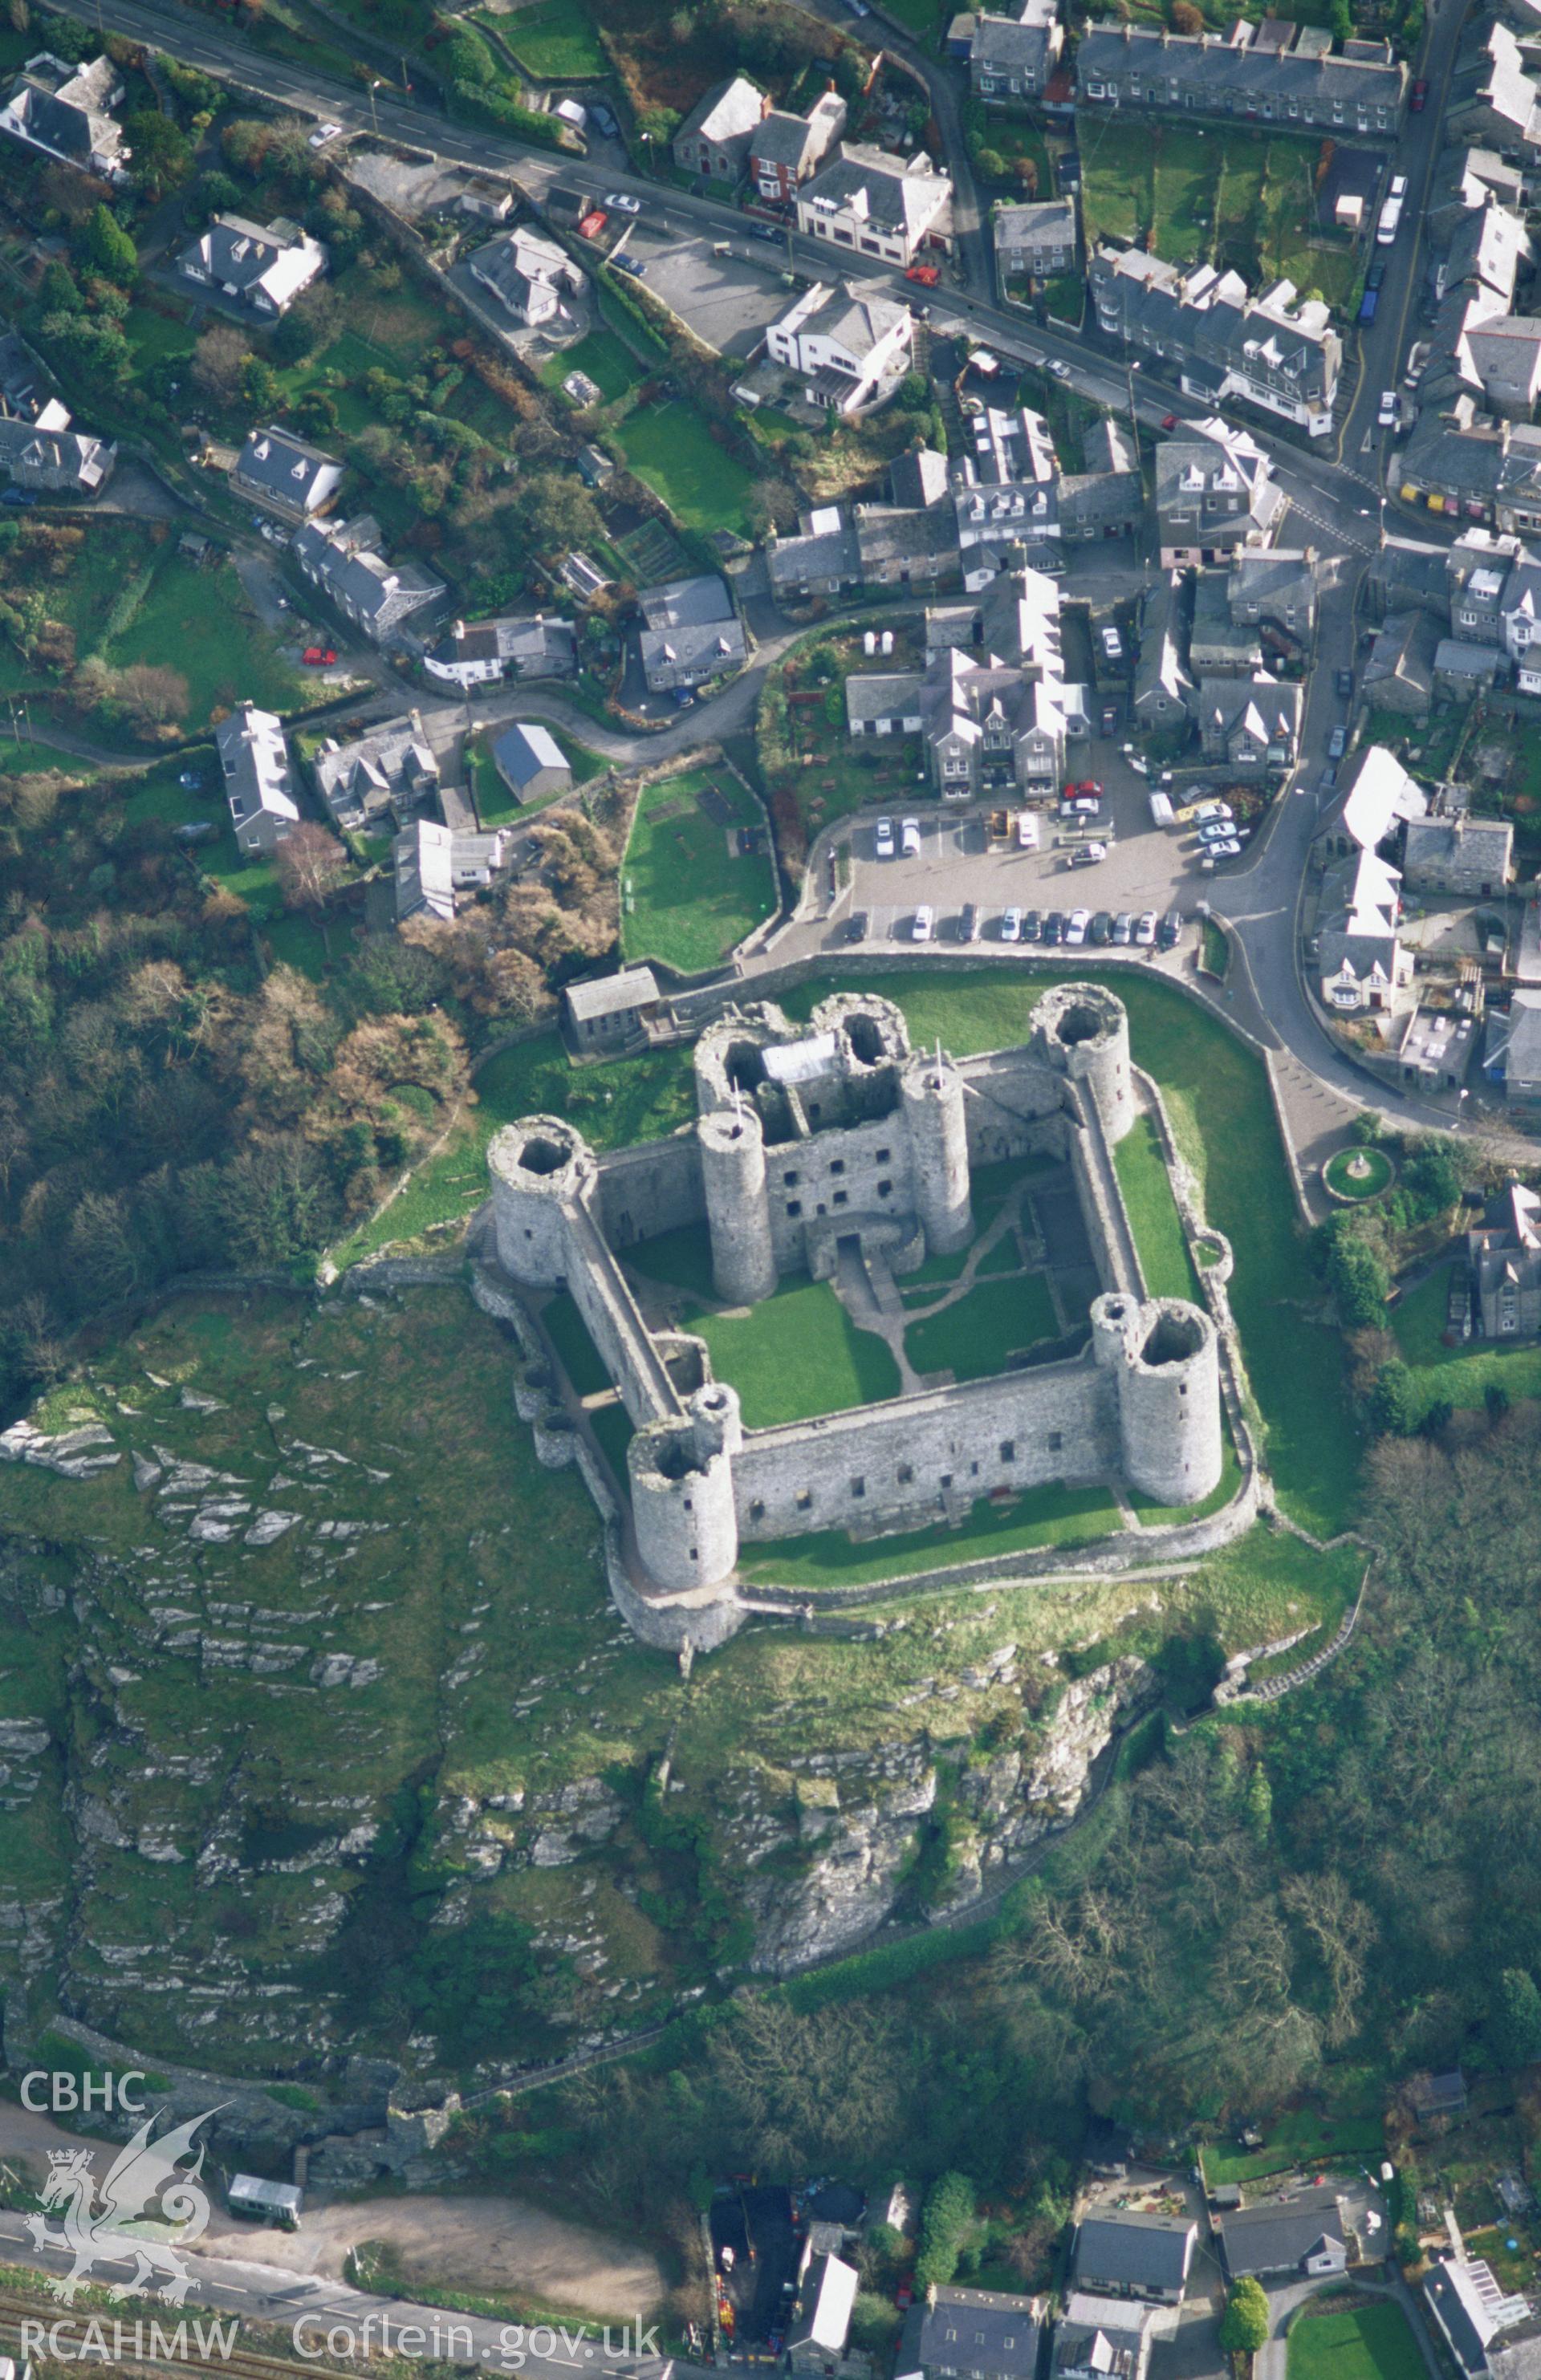 Slide of RCAHMW colour oblique aerial photograph of Harlech Castle, taken by T.G. Driver, 2002.